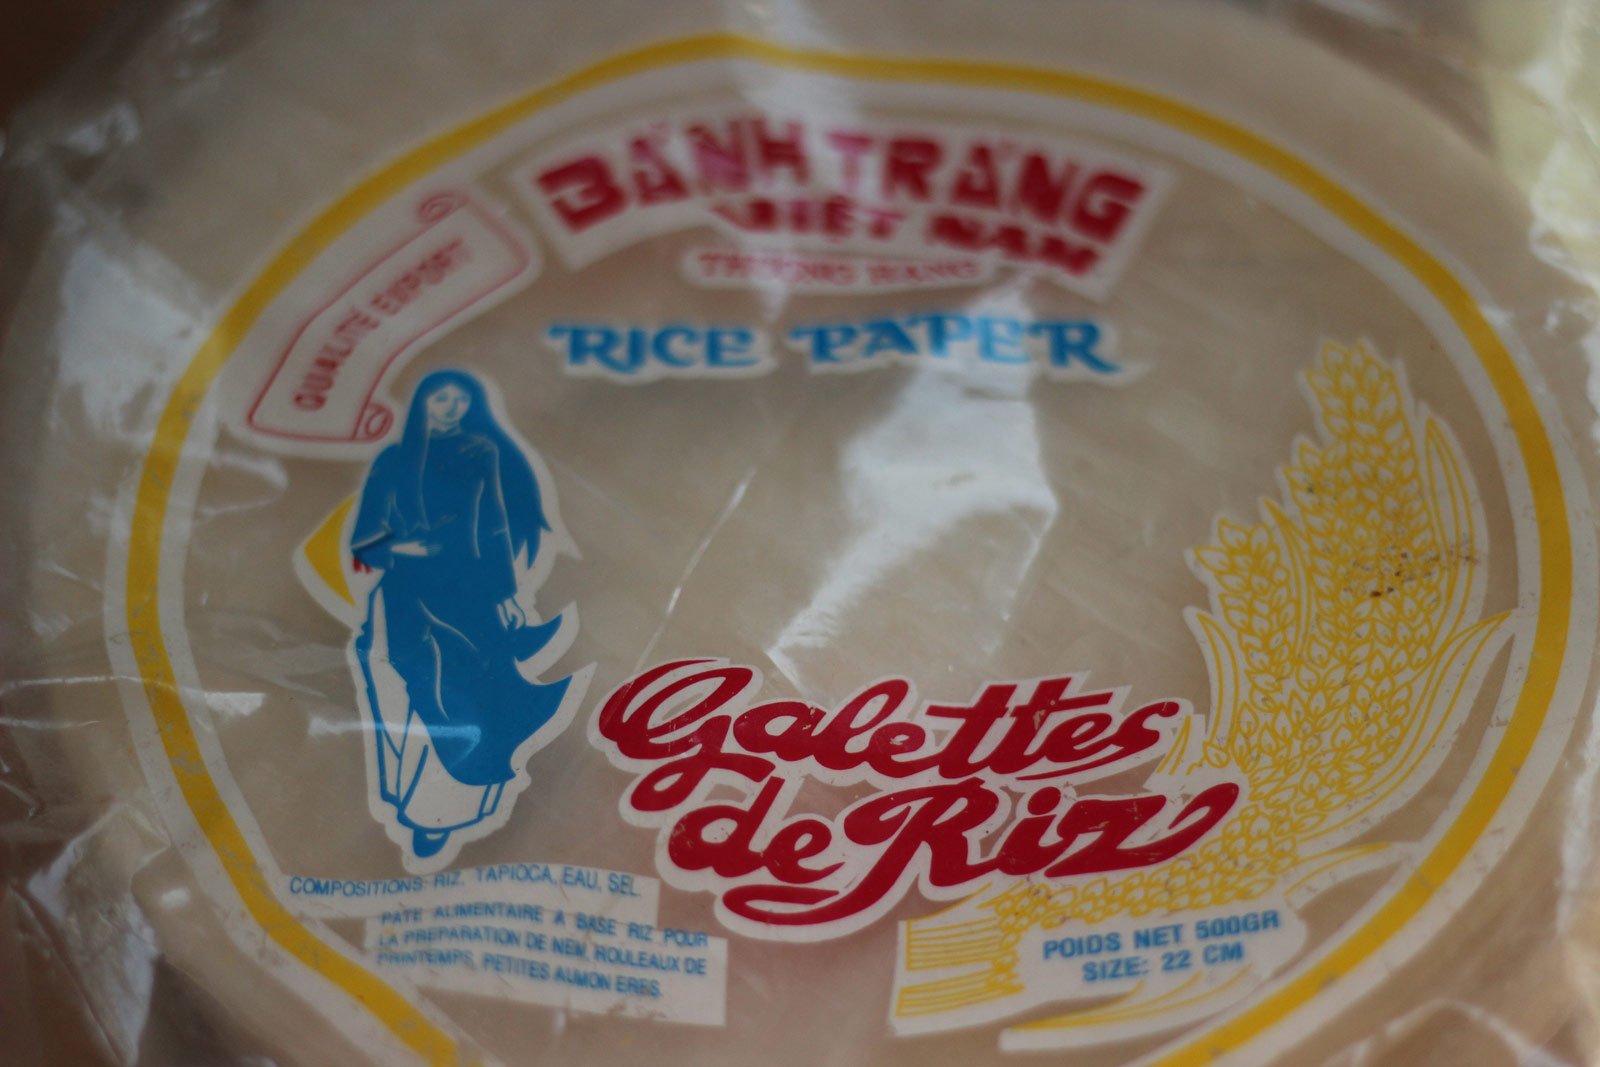 Rice Paper